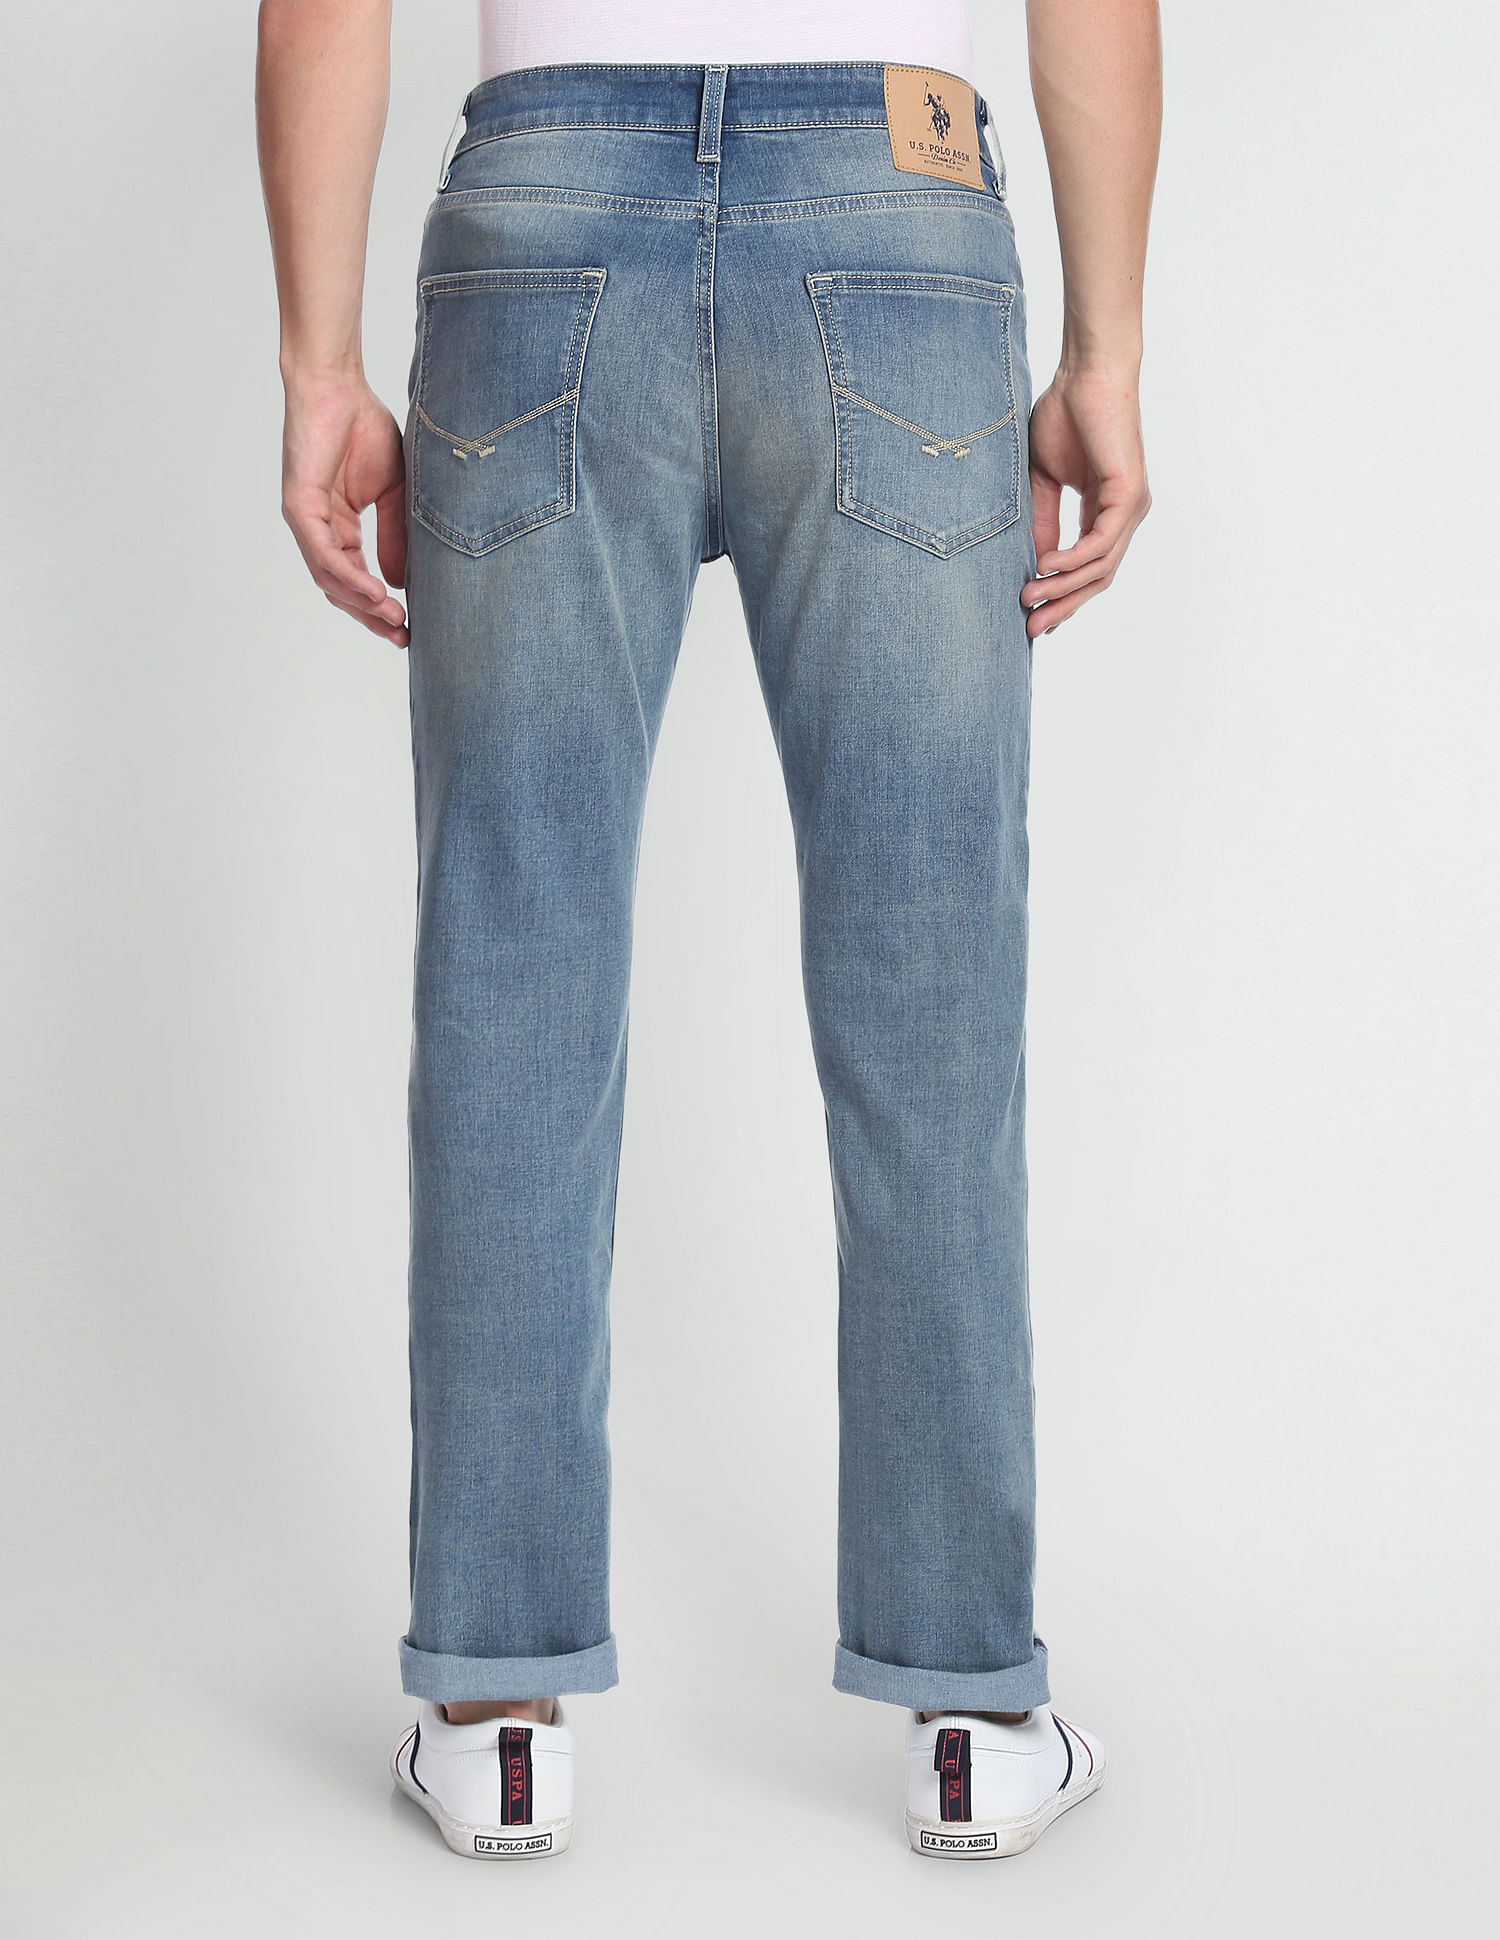 Plain Nordstrom Blue Regular Fit Jeans at Rs 810/piece in Ulhasnagar